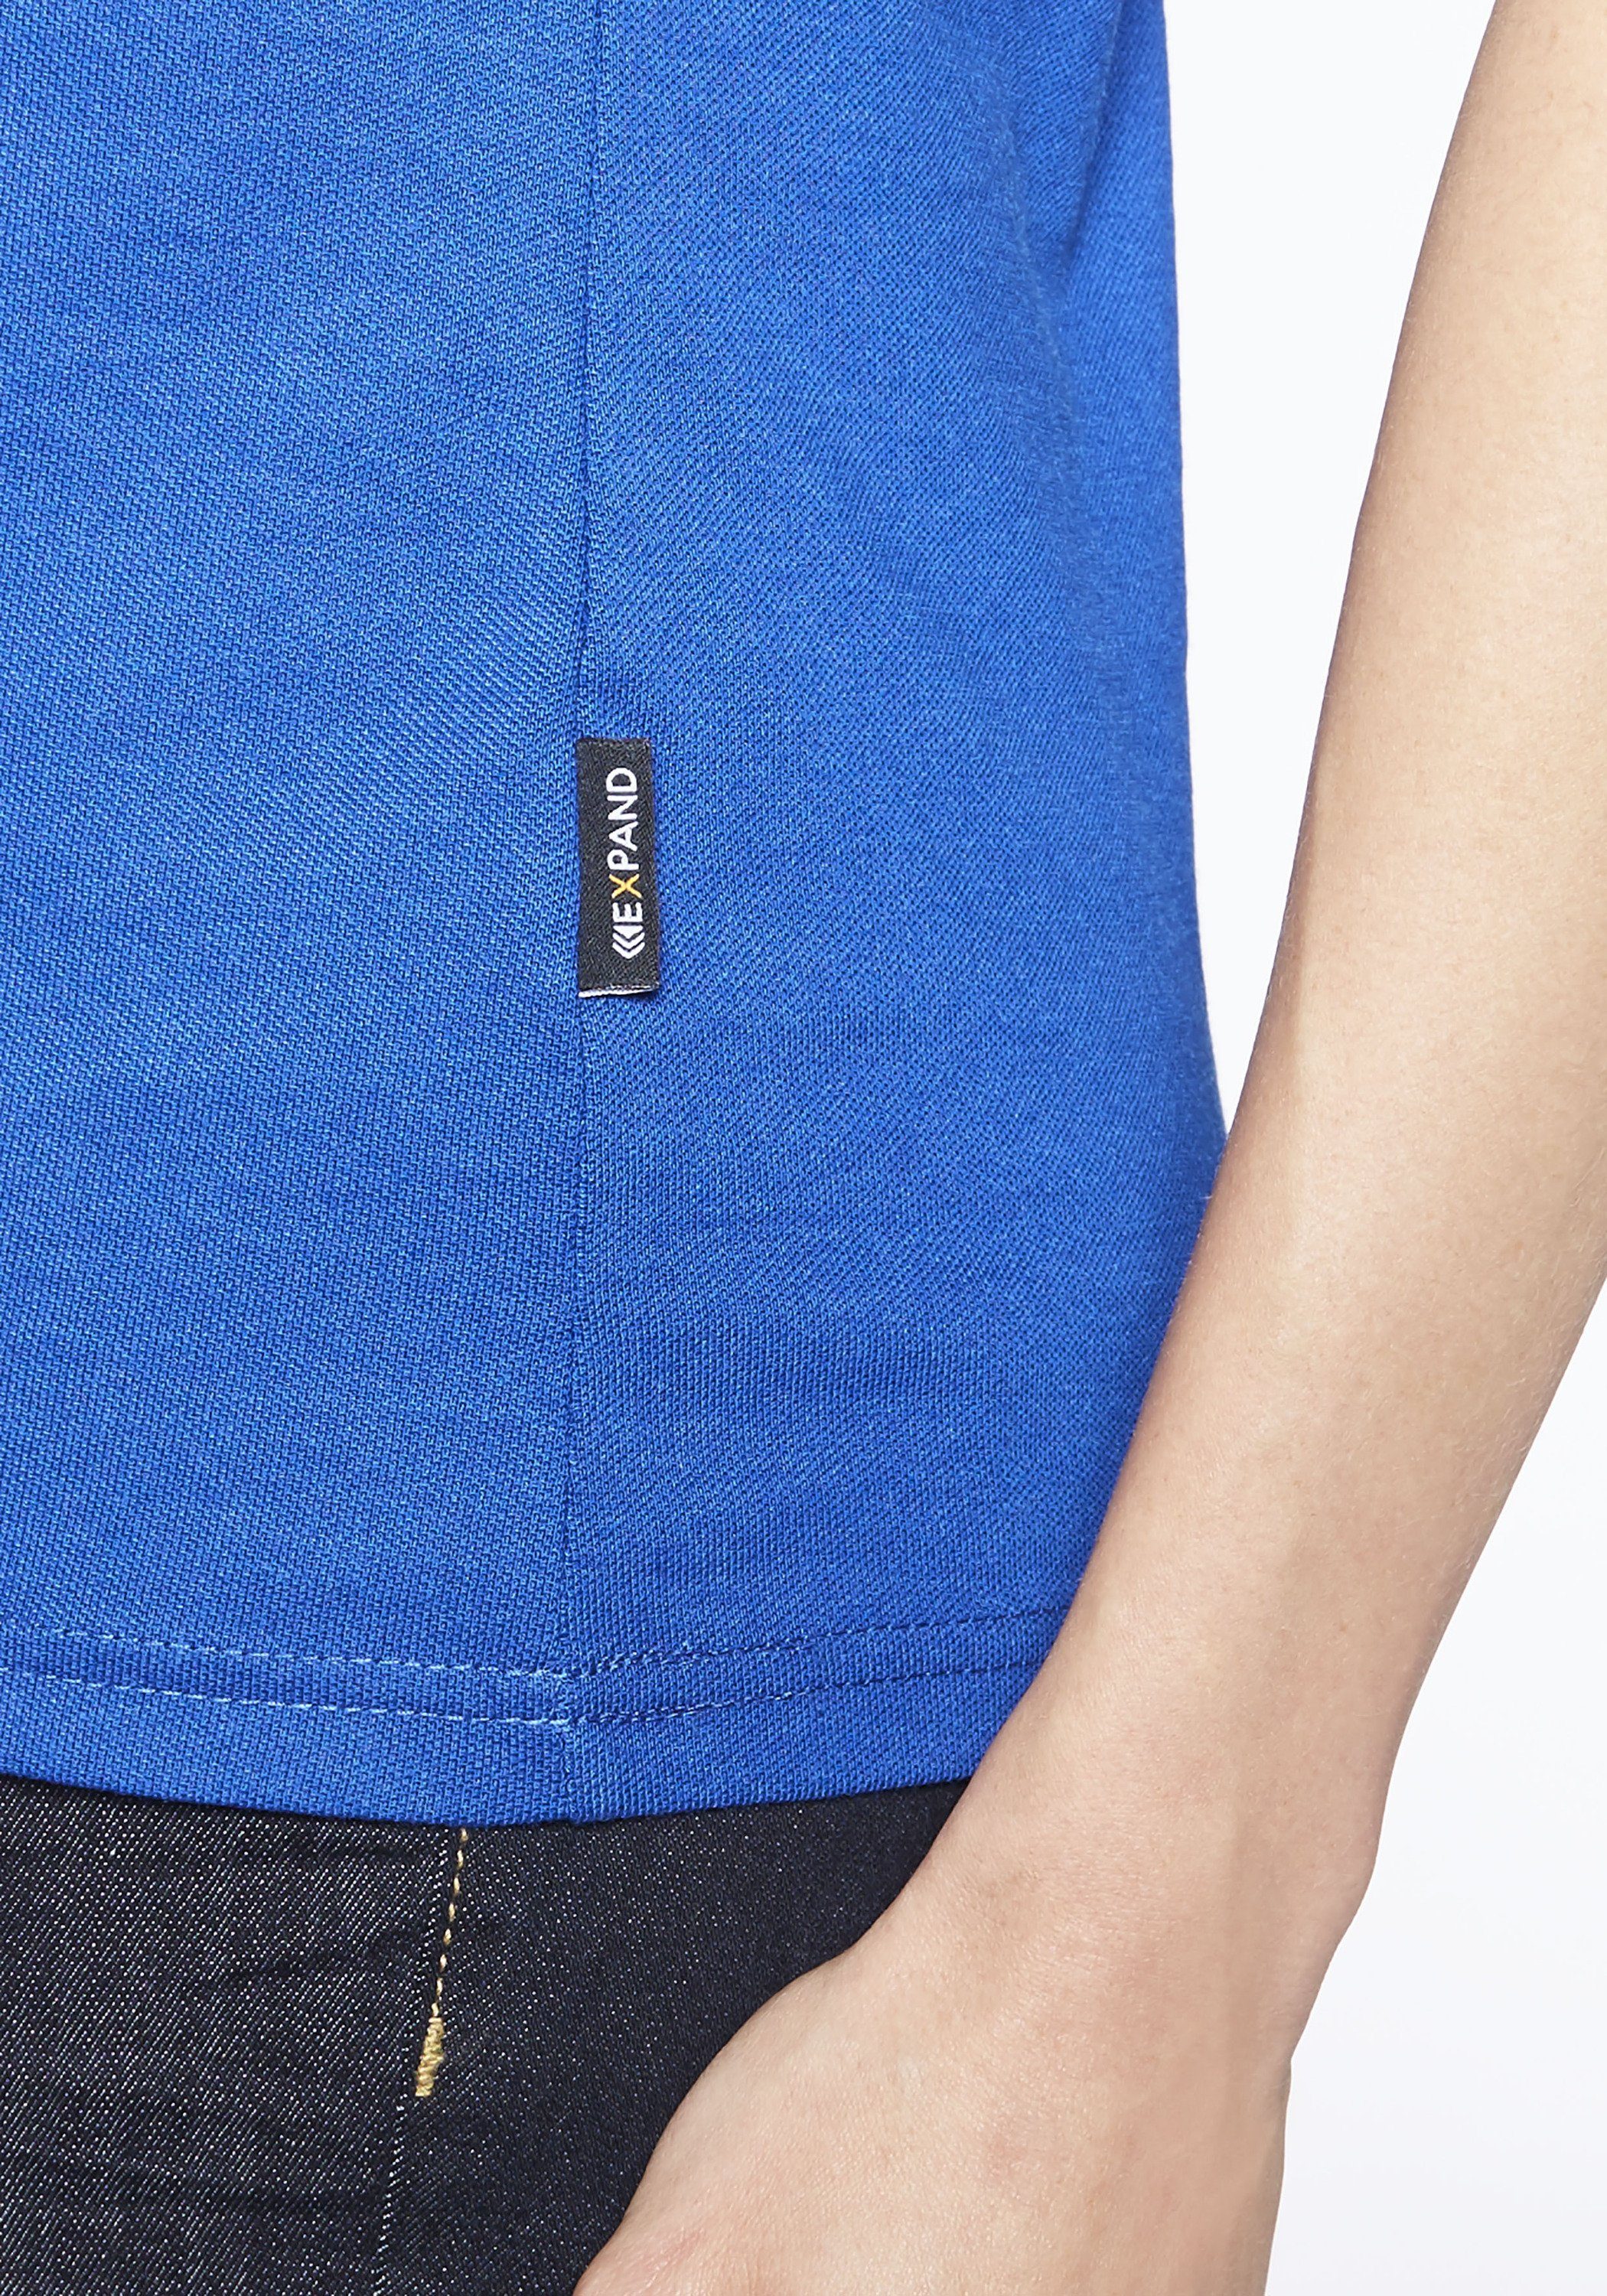 ultramarine blau Material strapazierfähigem Expand Poloshirt aus